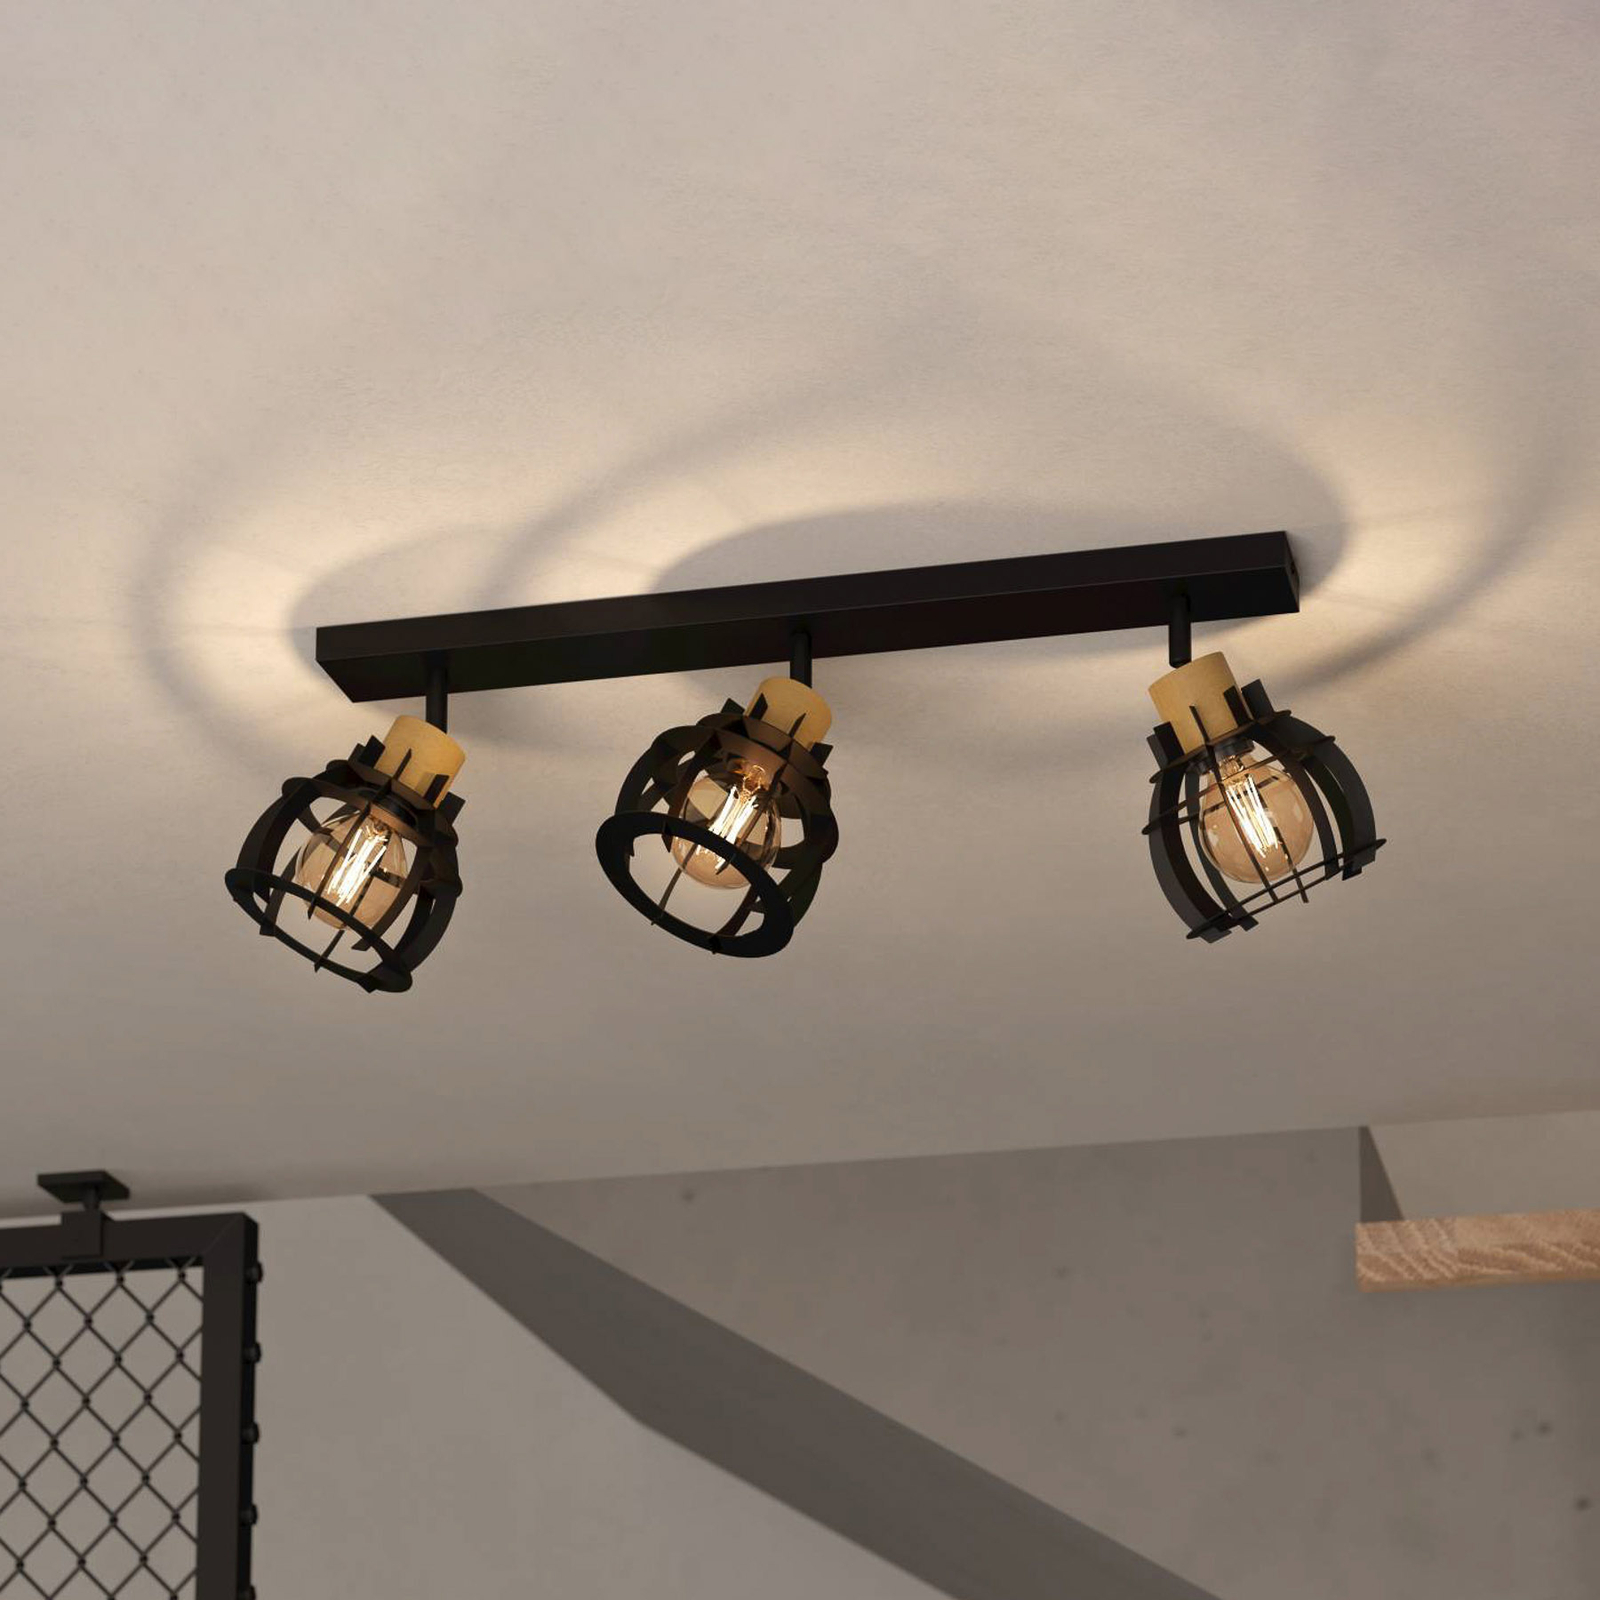 Stillington 1 ceiling light, 3-bulb